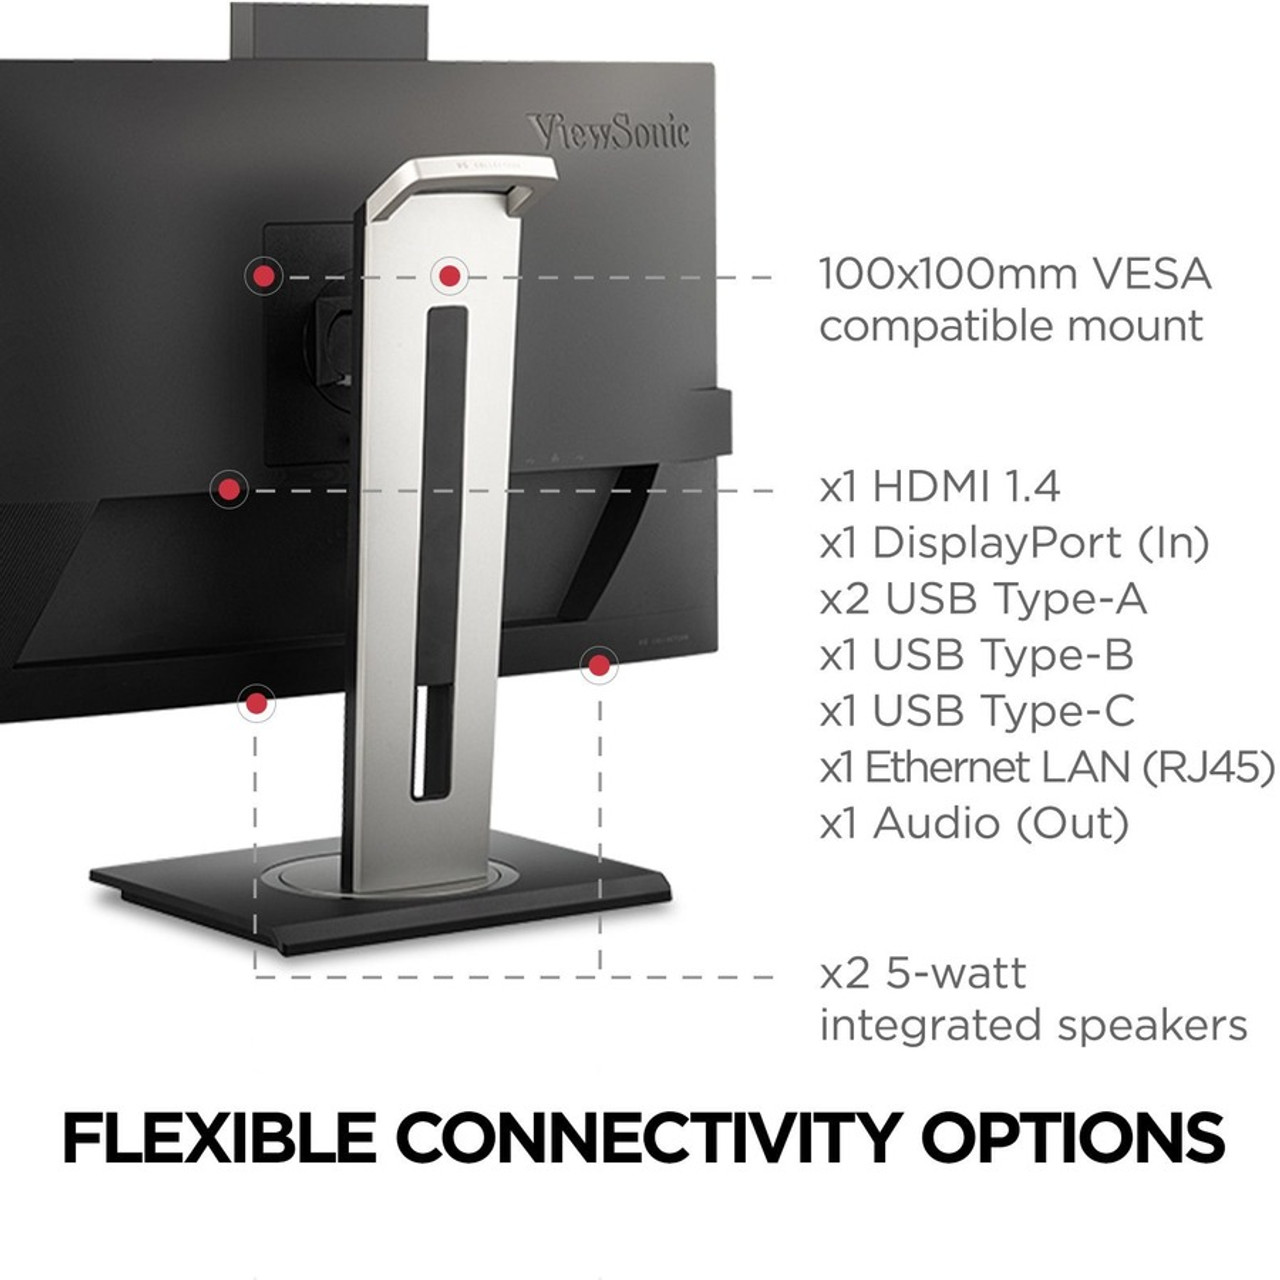 ViewSonic VG2756V-2K - Video Conference Monitor w/ Webcam & Ethernet, 27,  QHD, 90W USB C